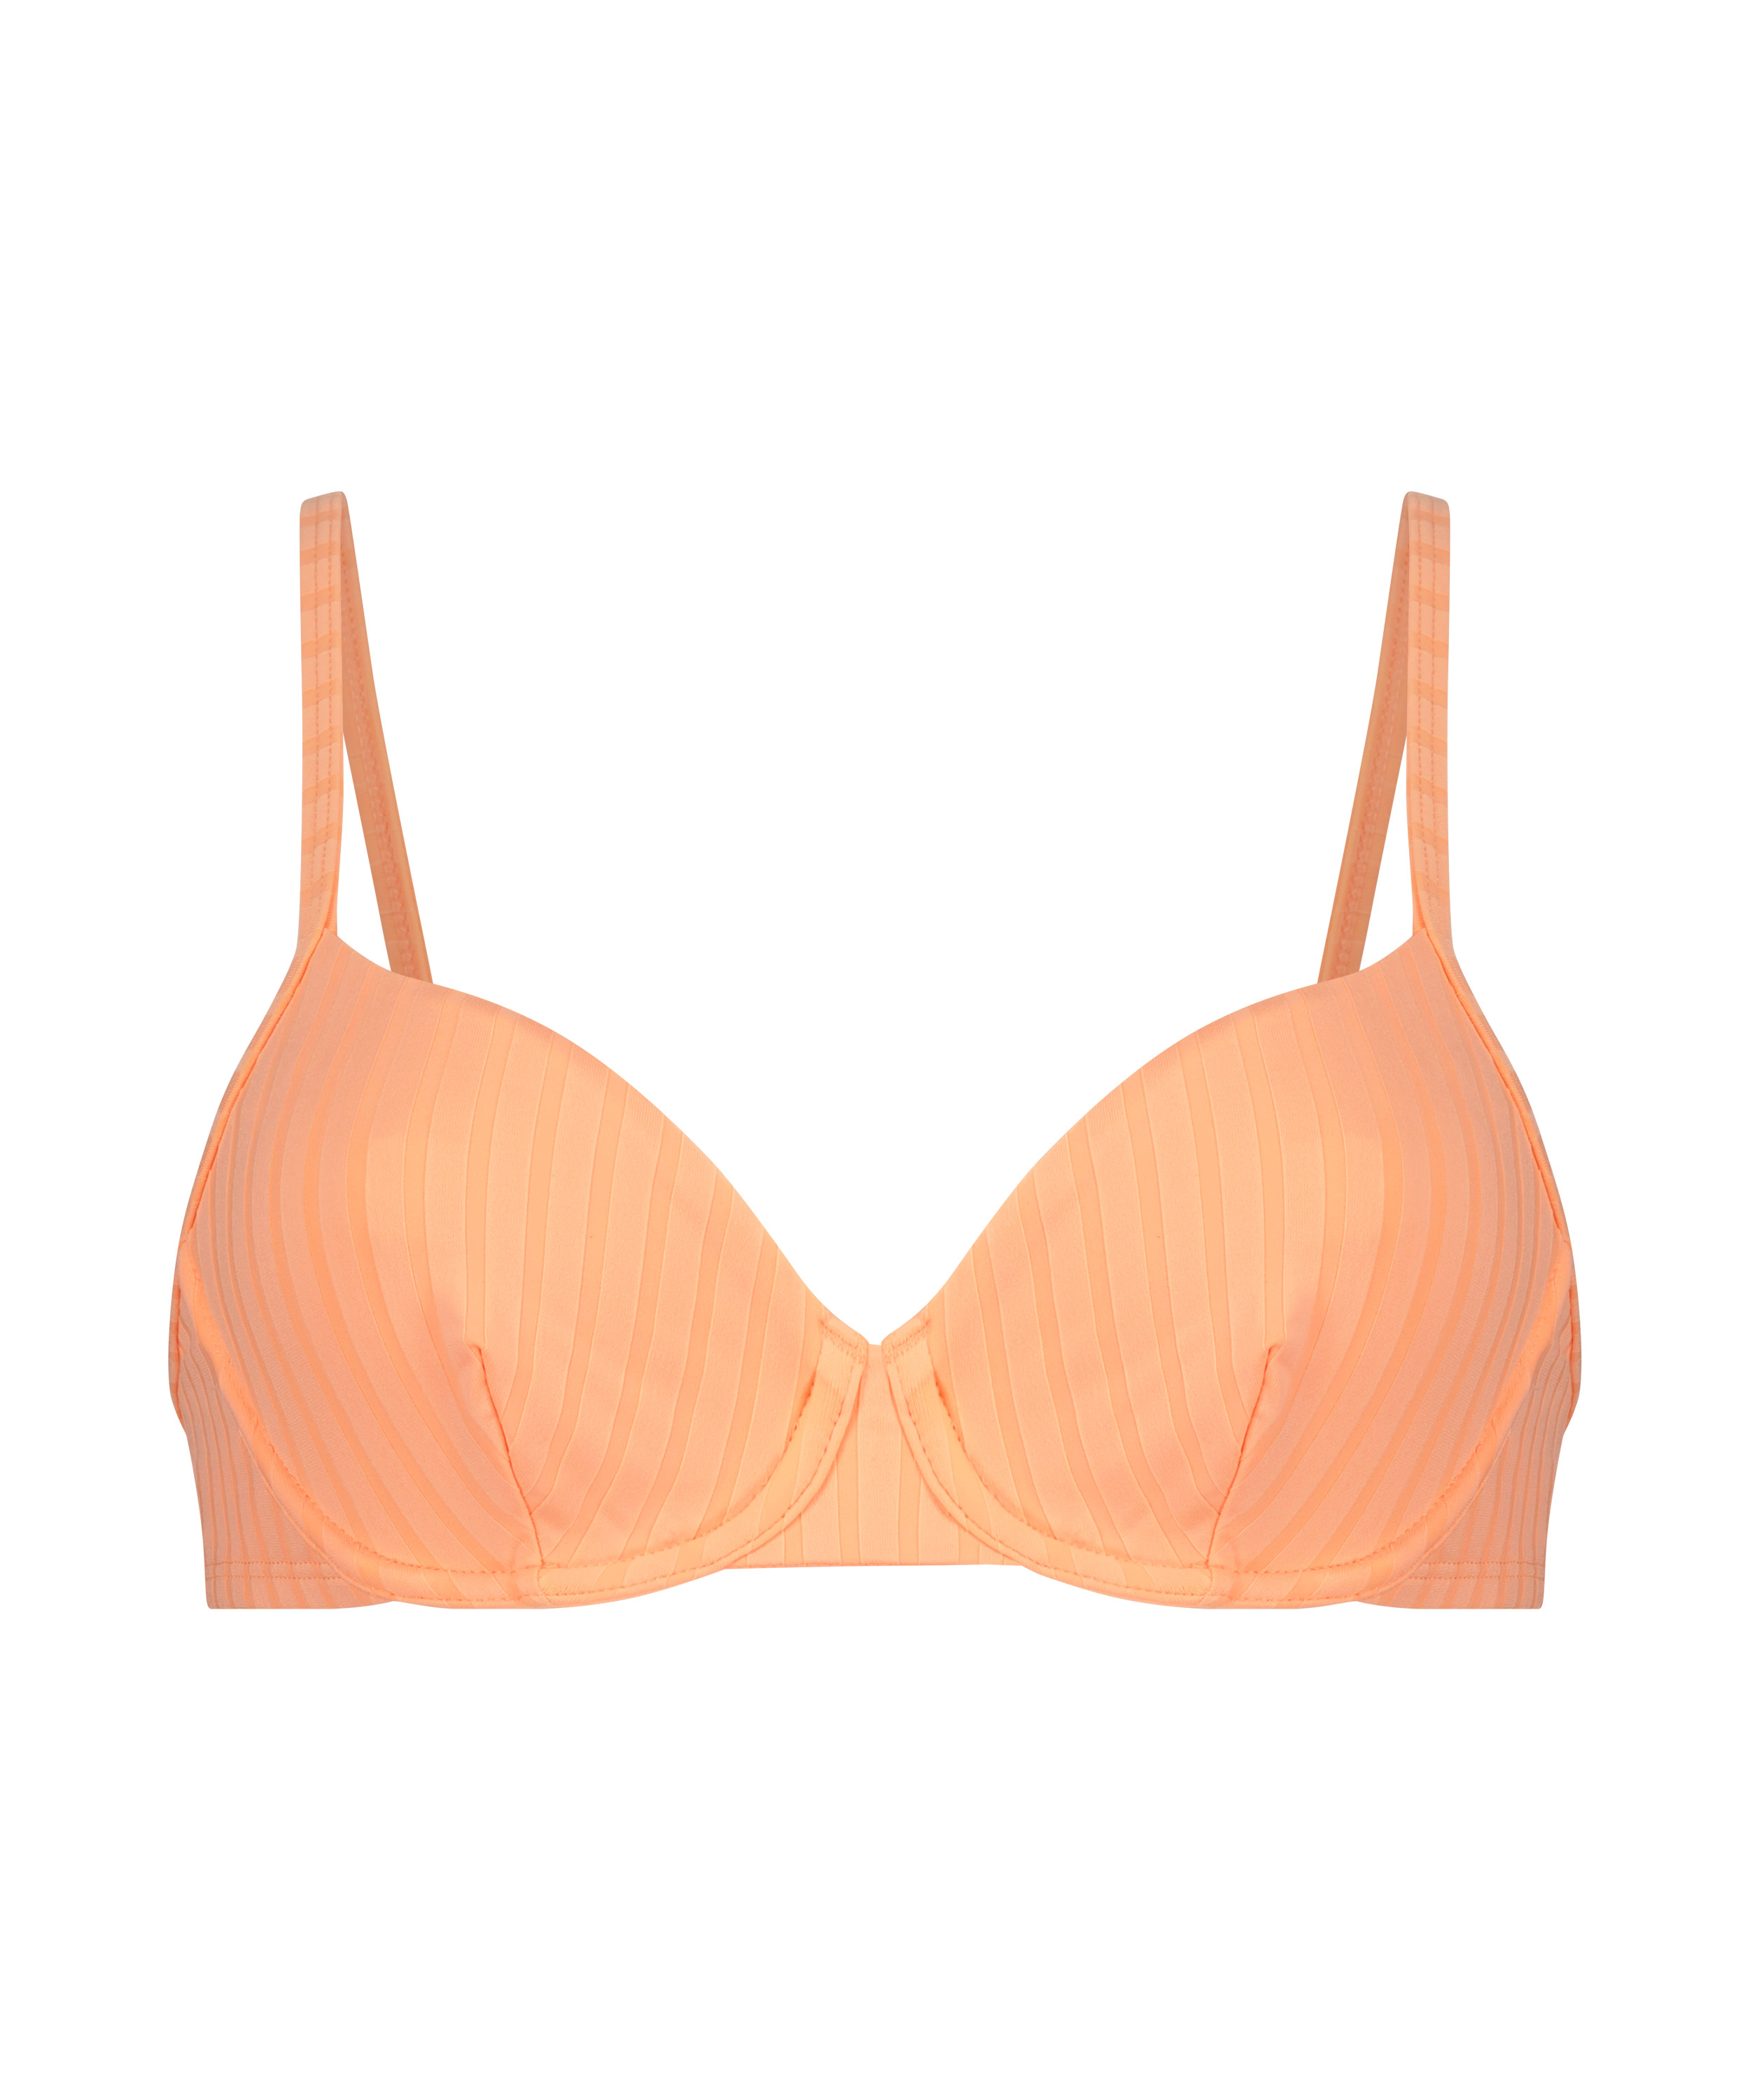 Unwattiertes Bügel-Bikini-Top Gili Rib, Orange, main